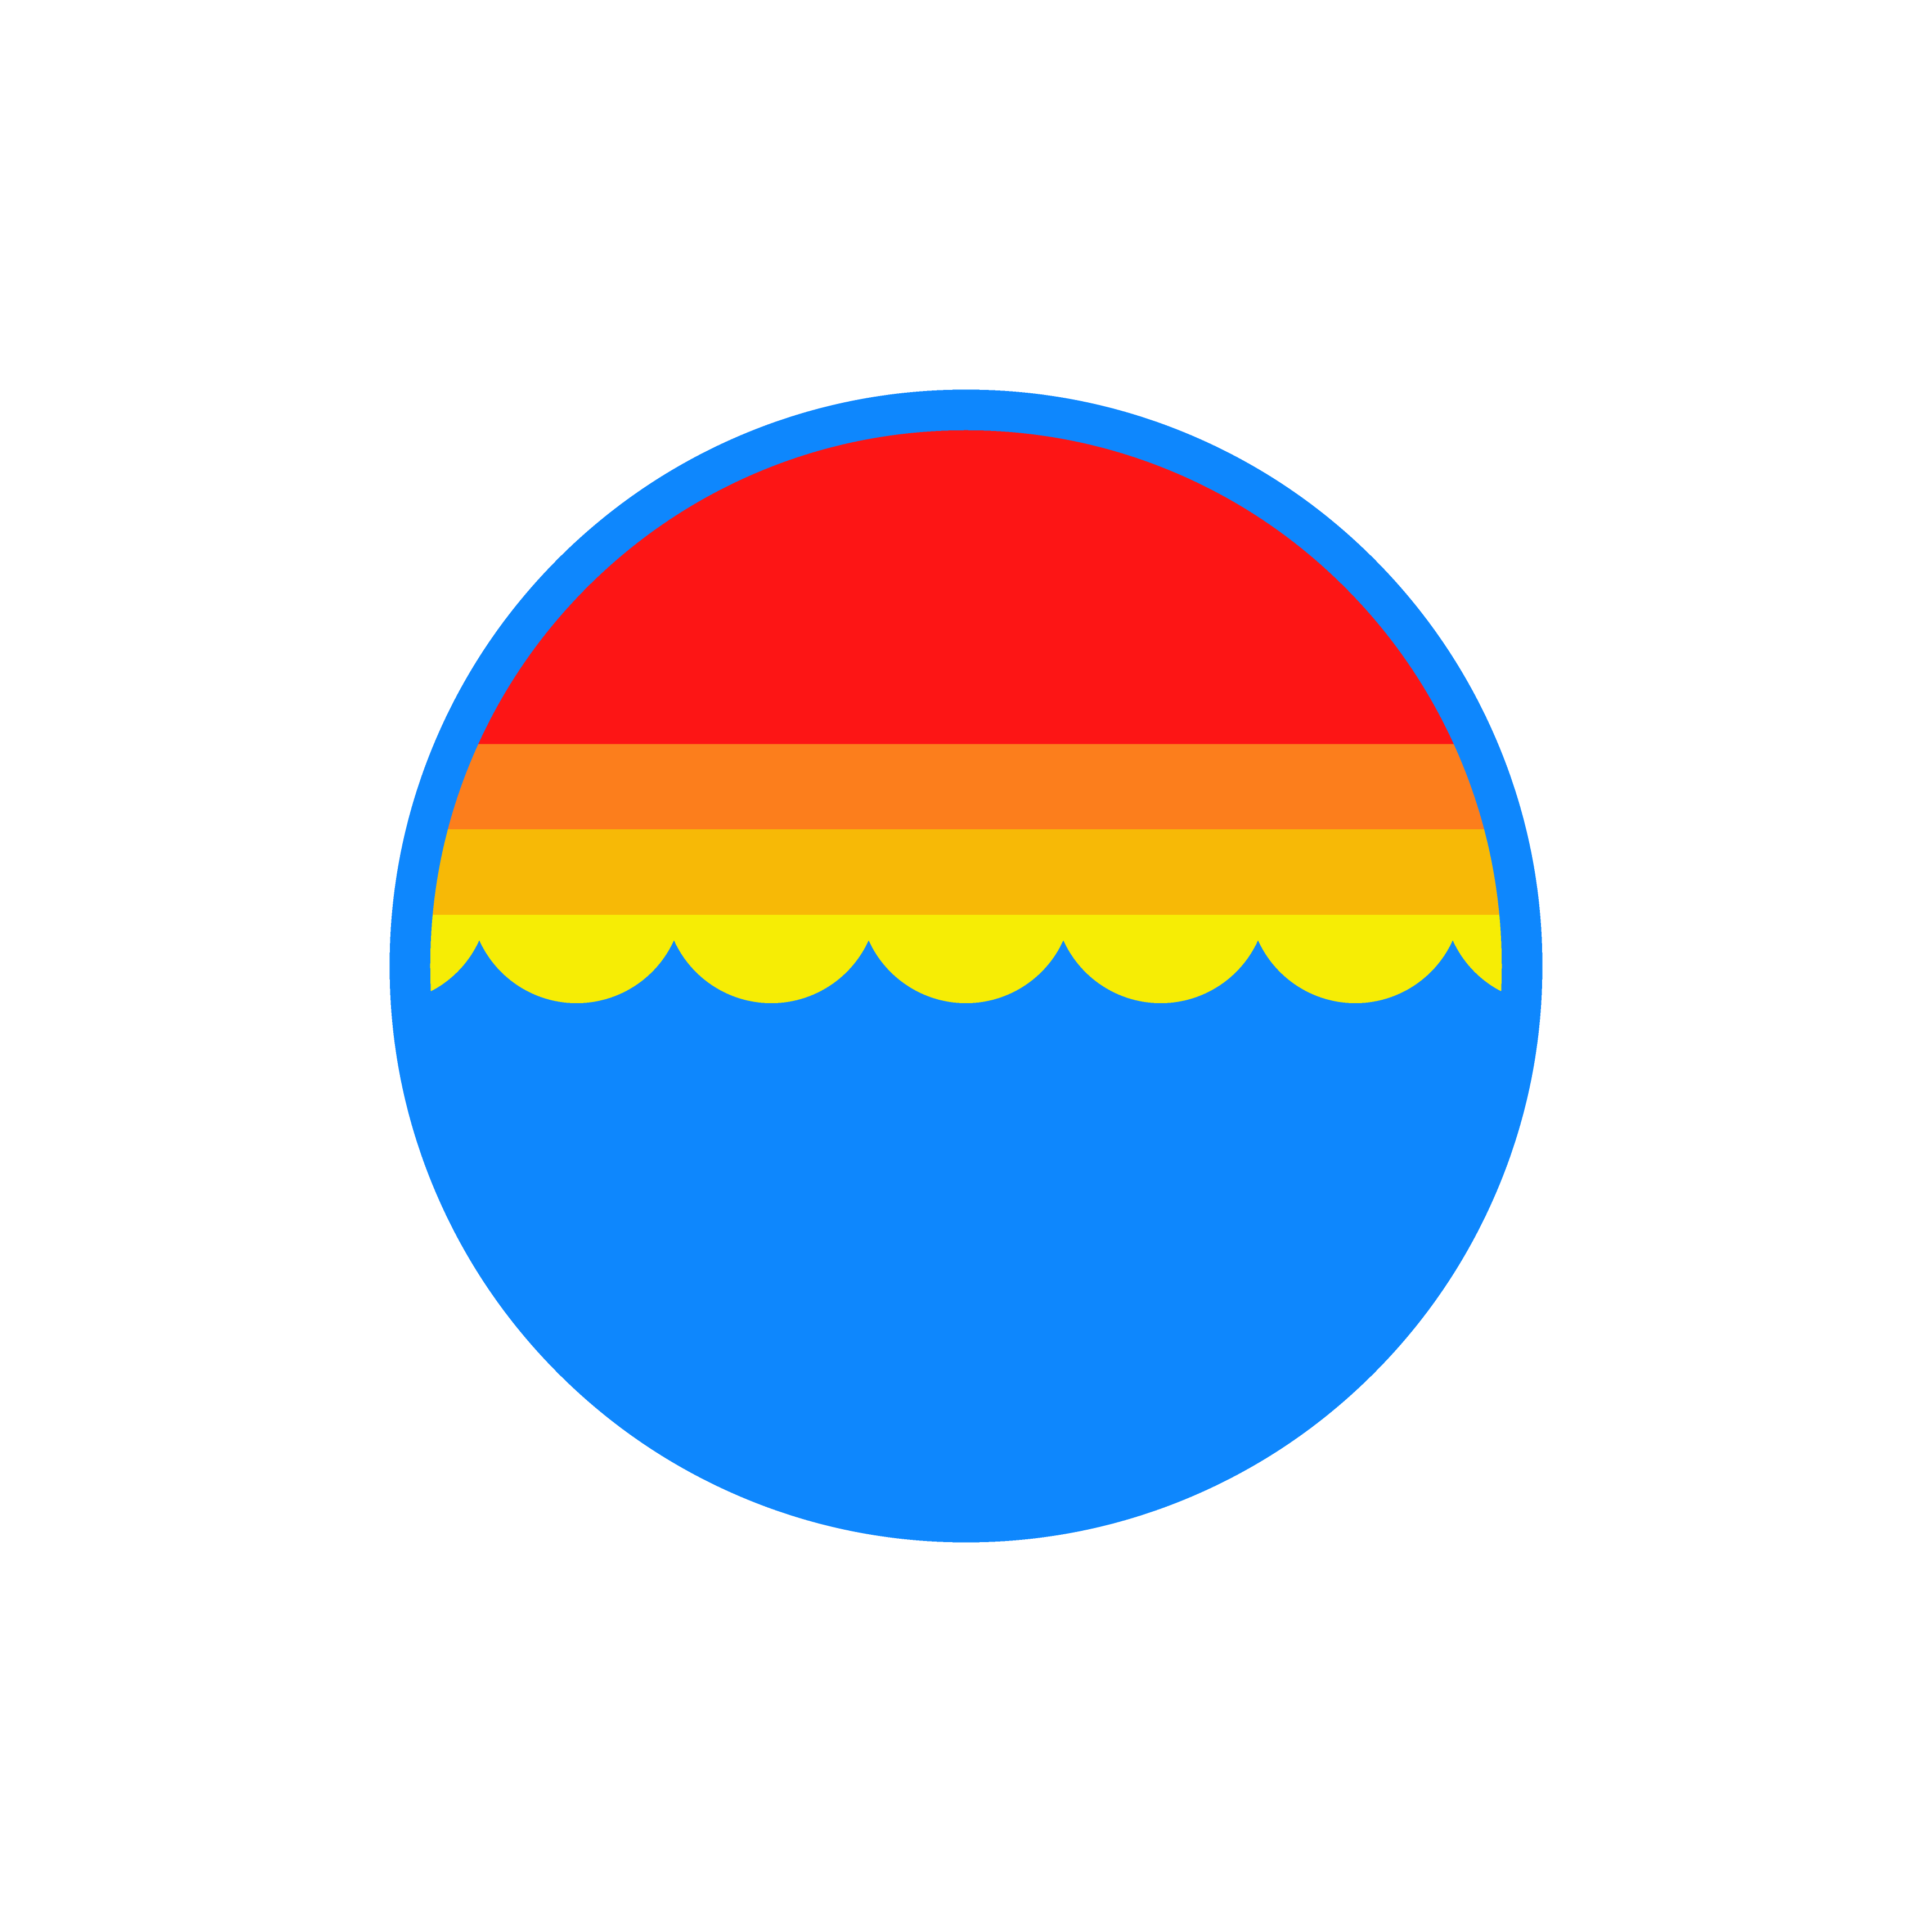 PK Pool Plastering